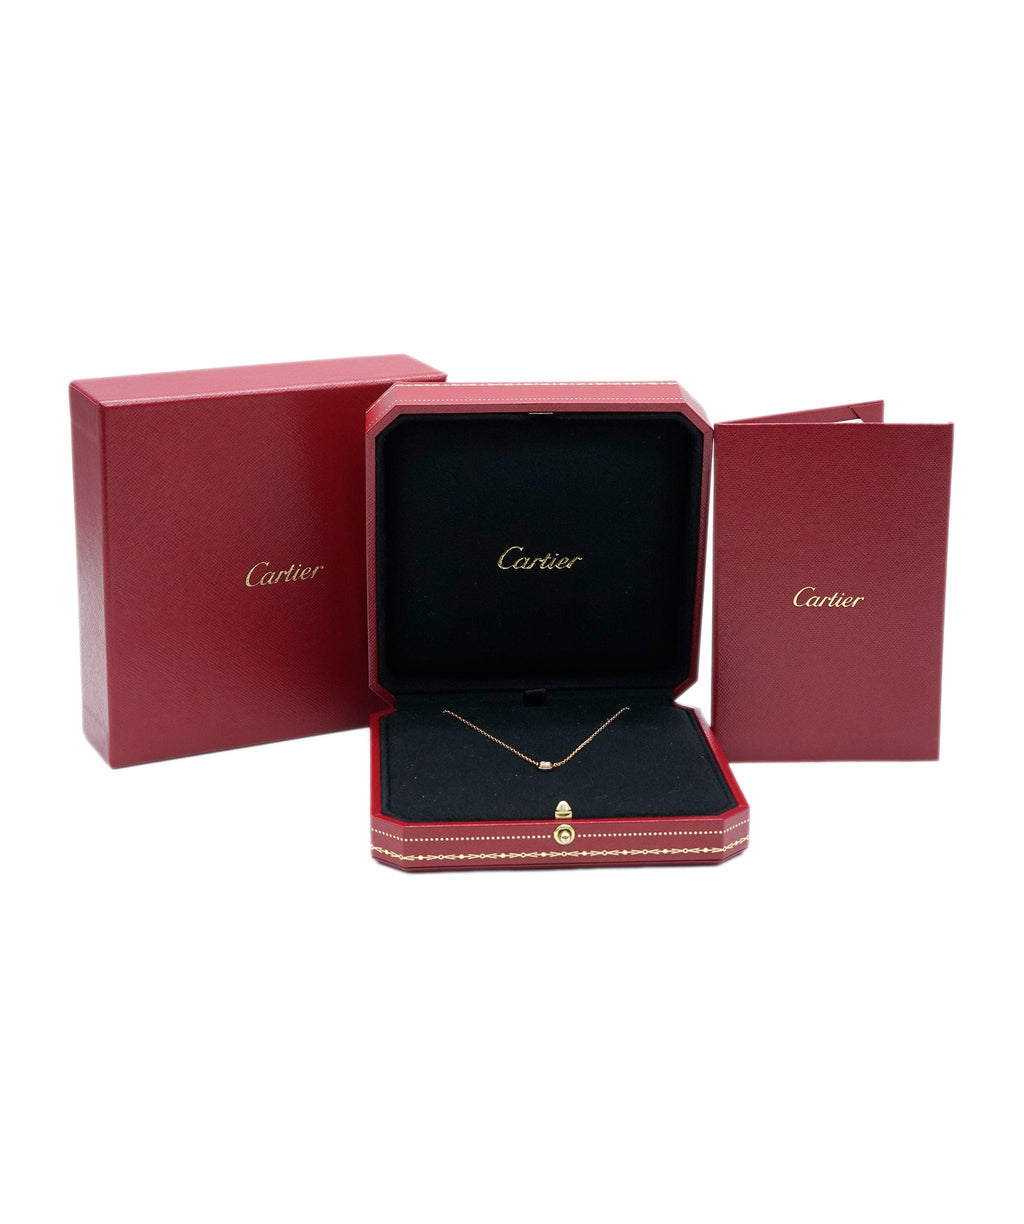 Cartier D'Amour Necklace - 18K Gold with Brilliant-Cut Diamond